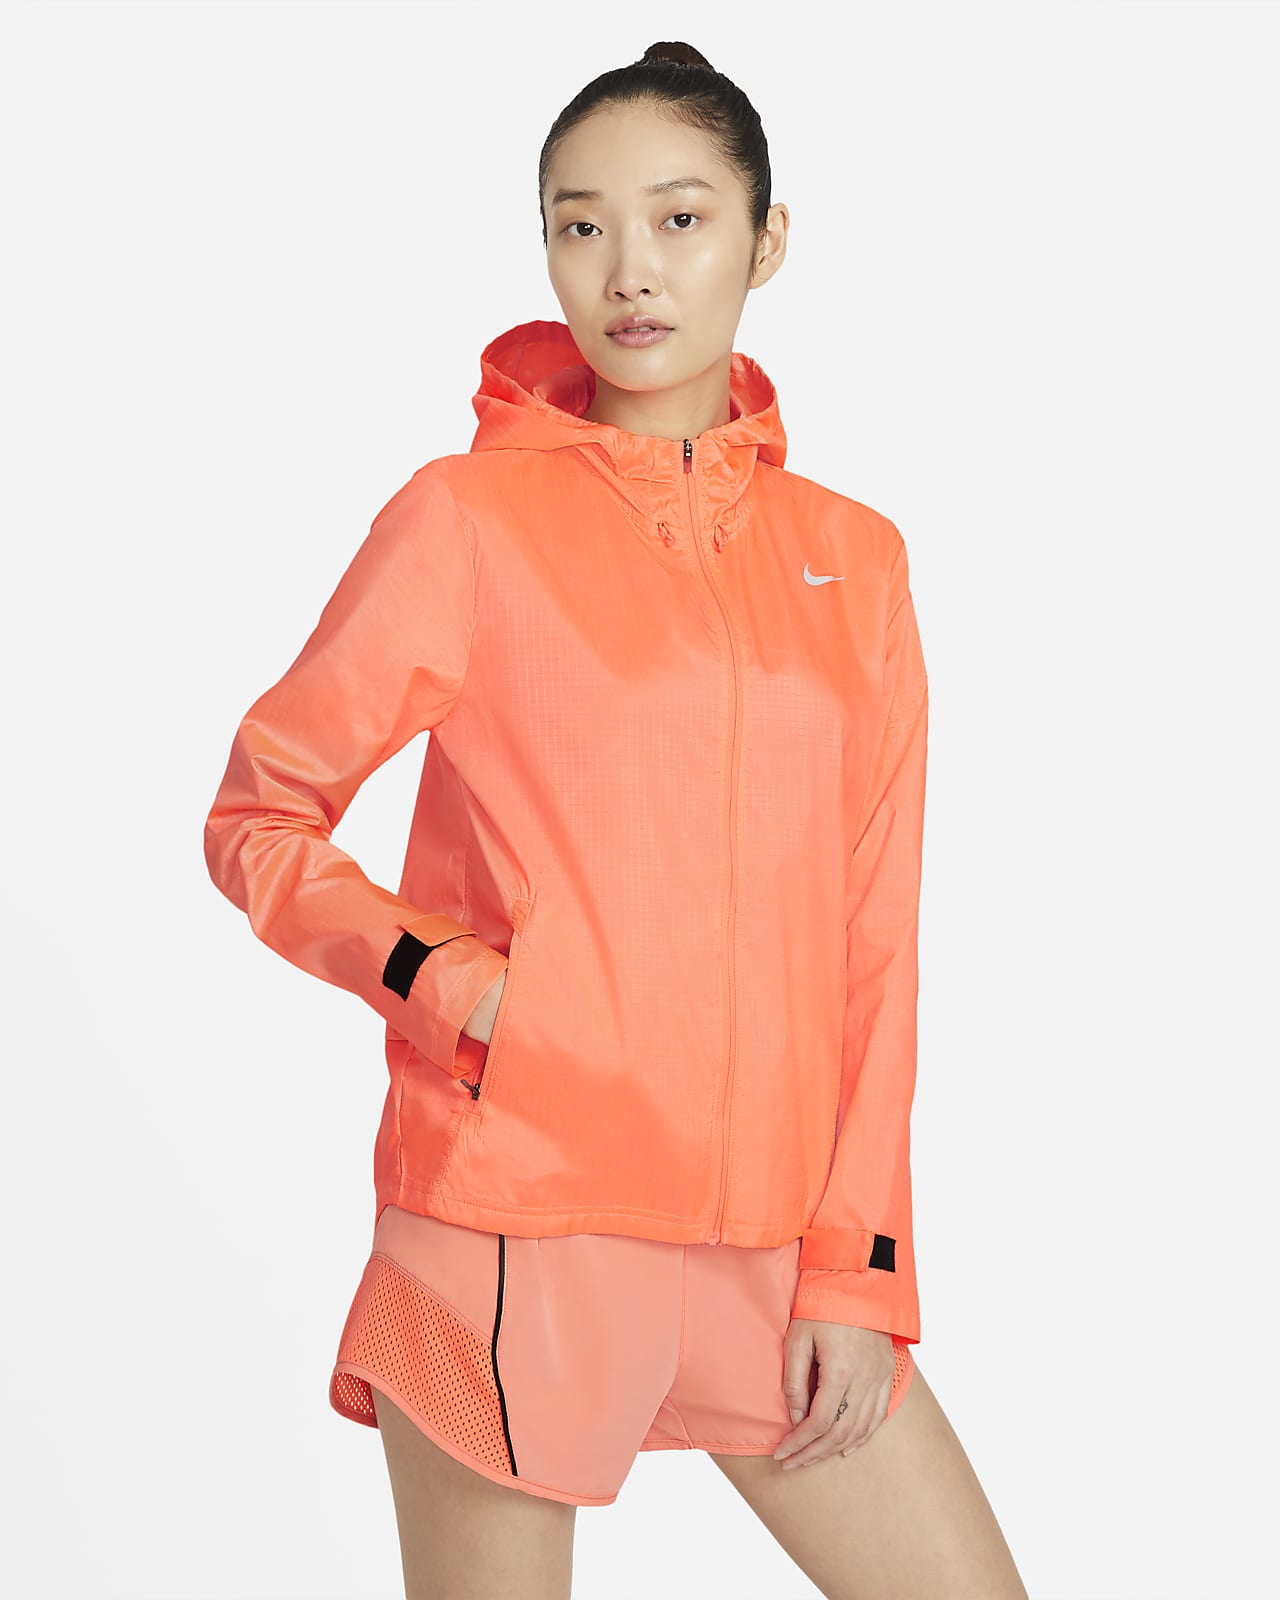 women's running jacket nike essential